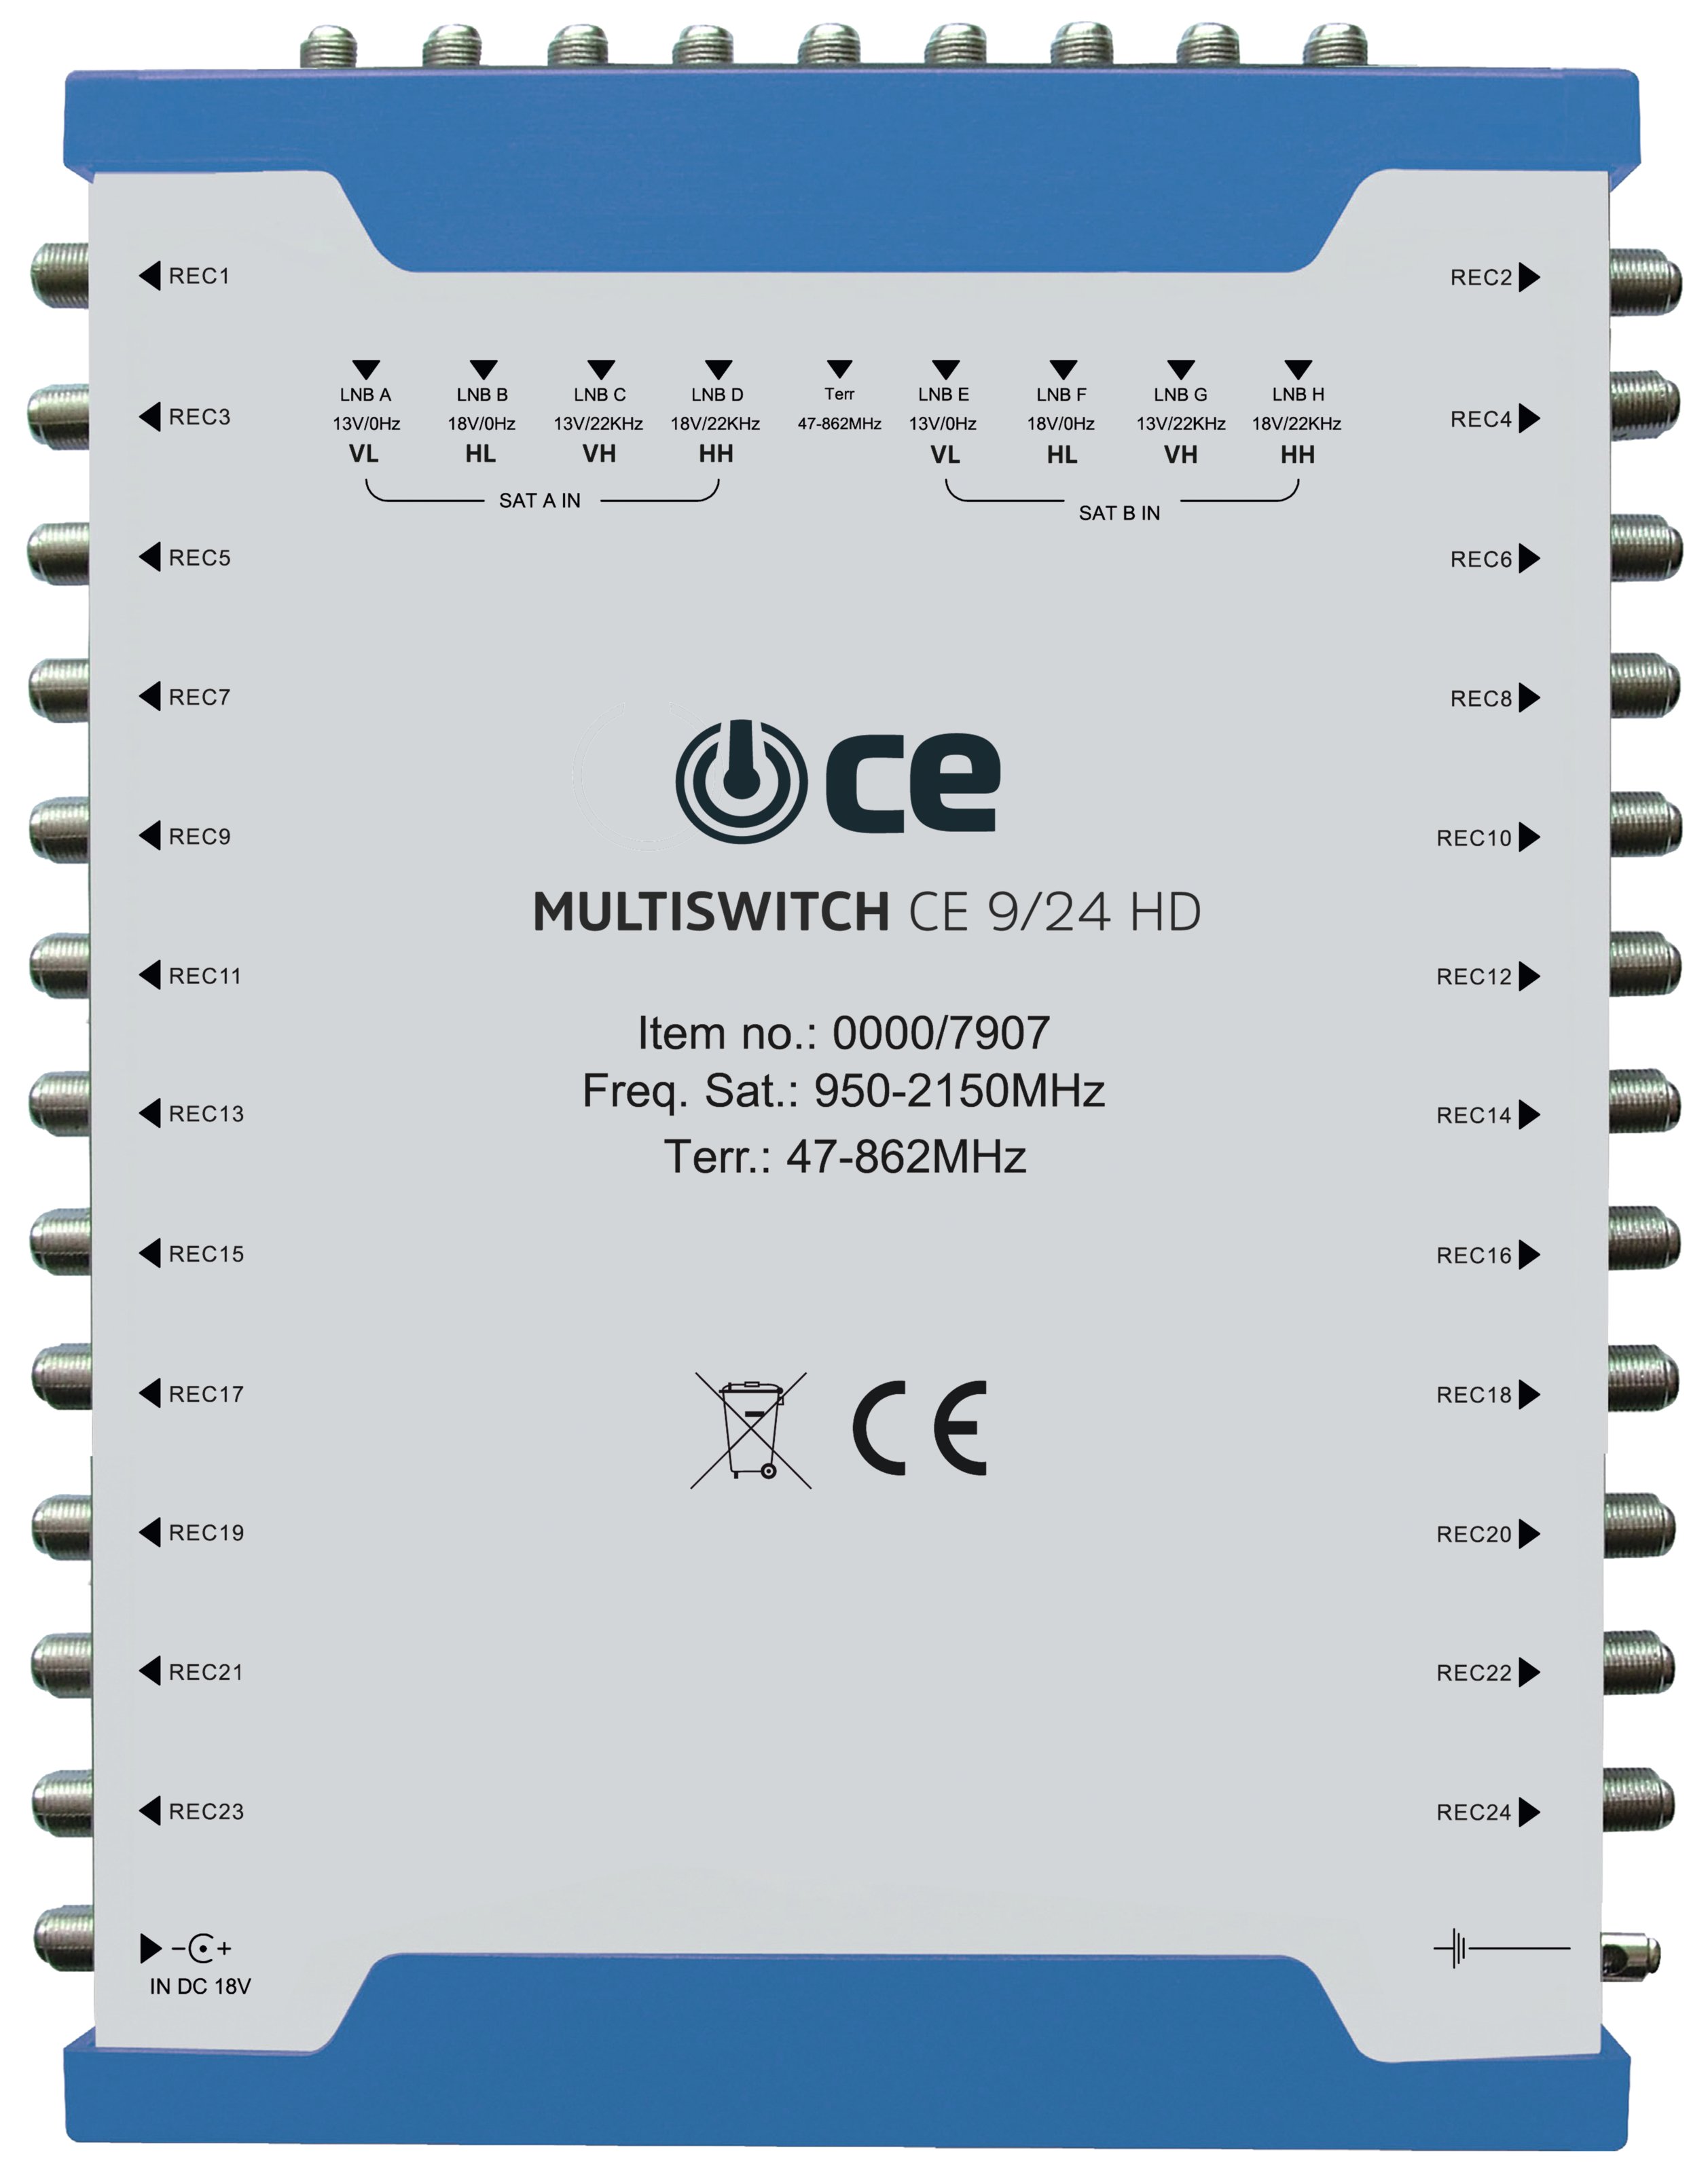 Multiswitch CE 9/24 HD